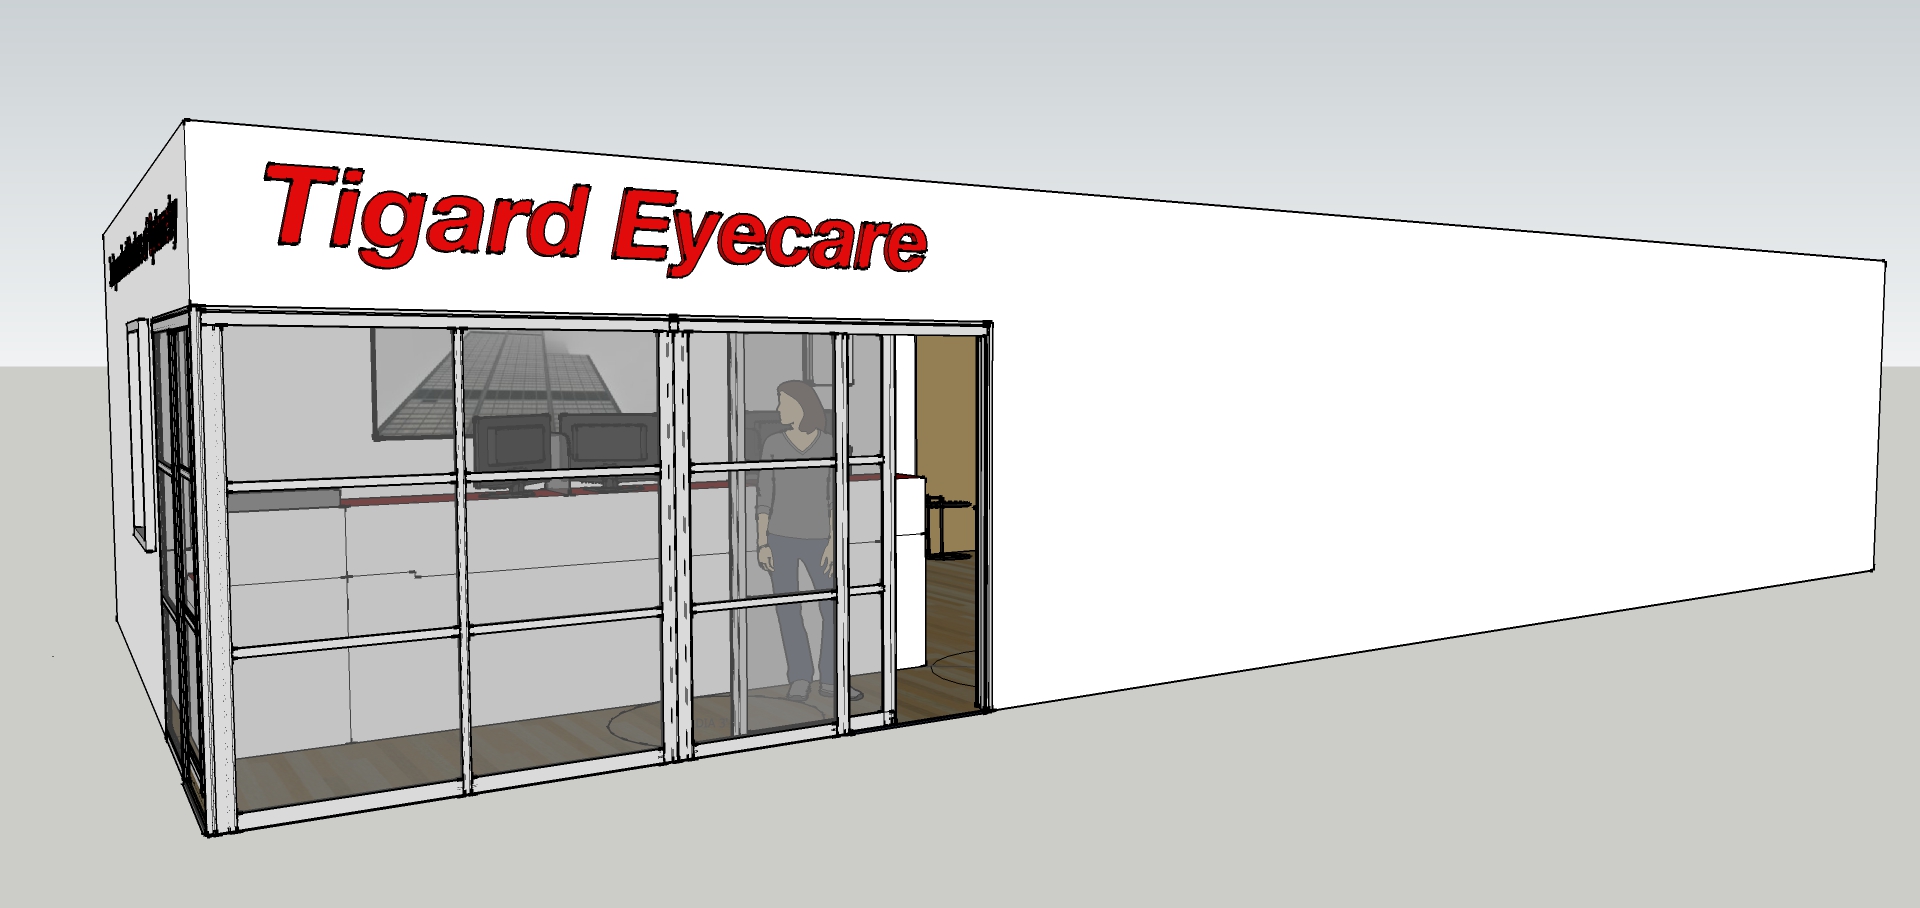 Tigard Eyecare Proposed Remodel